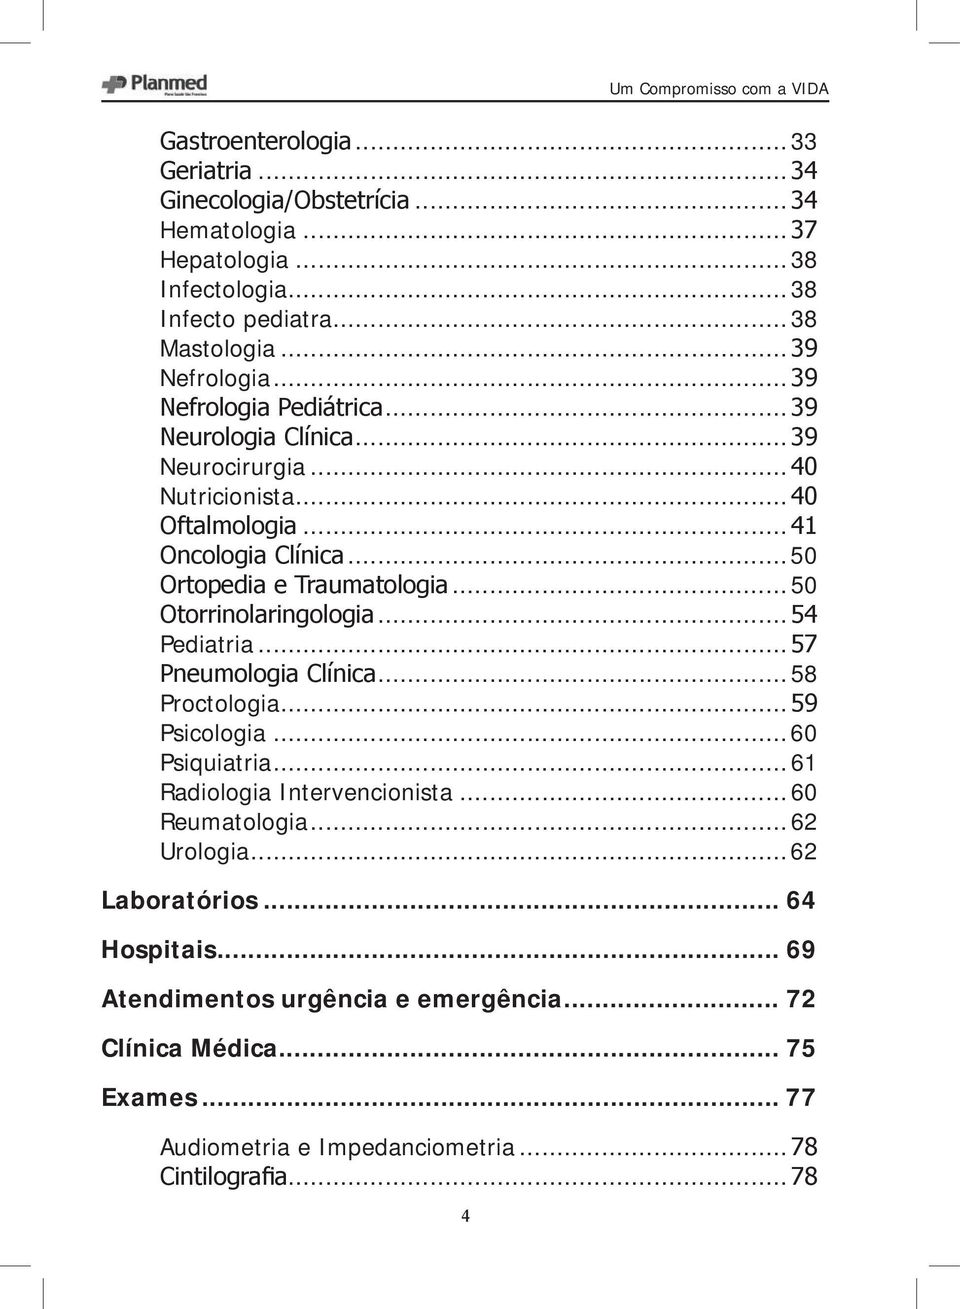 ..50 Ortopedia e Traumatologia...50 Otorrinolaringologia...54 Pediatria...57 Pneumologia Clínica...58 Proctologia...59 Psicologia...60 Psiquiatria.